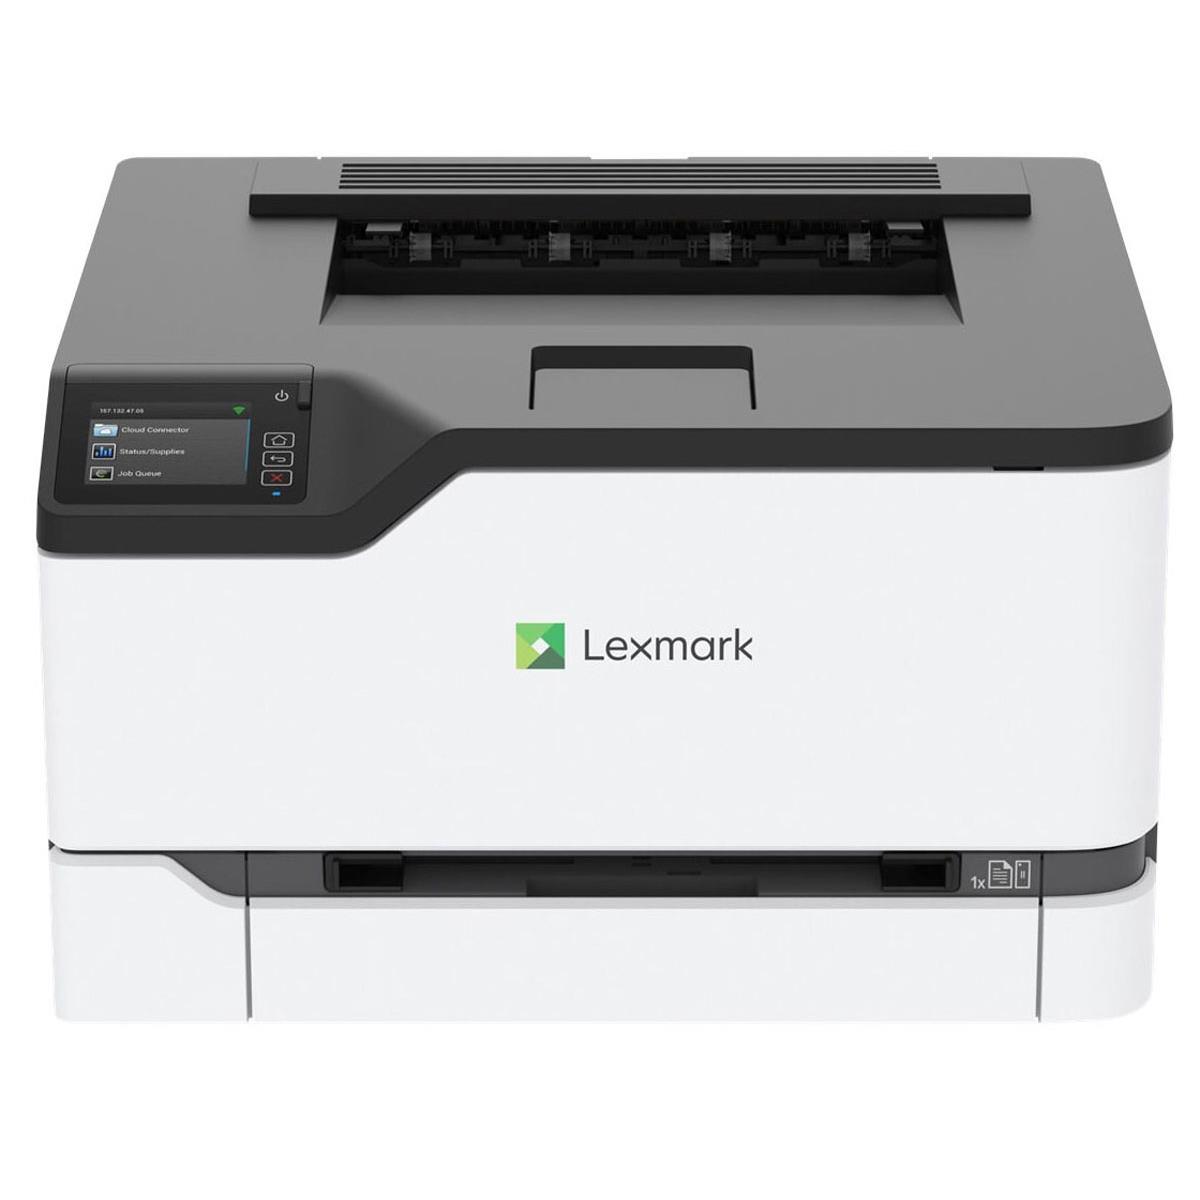 Image of Lexmark CS431dw Wireless Duplex Color Laser Printer